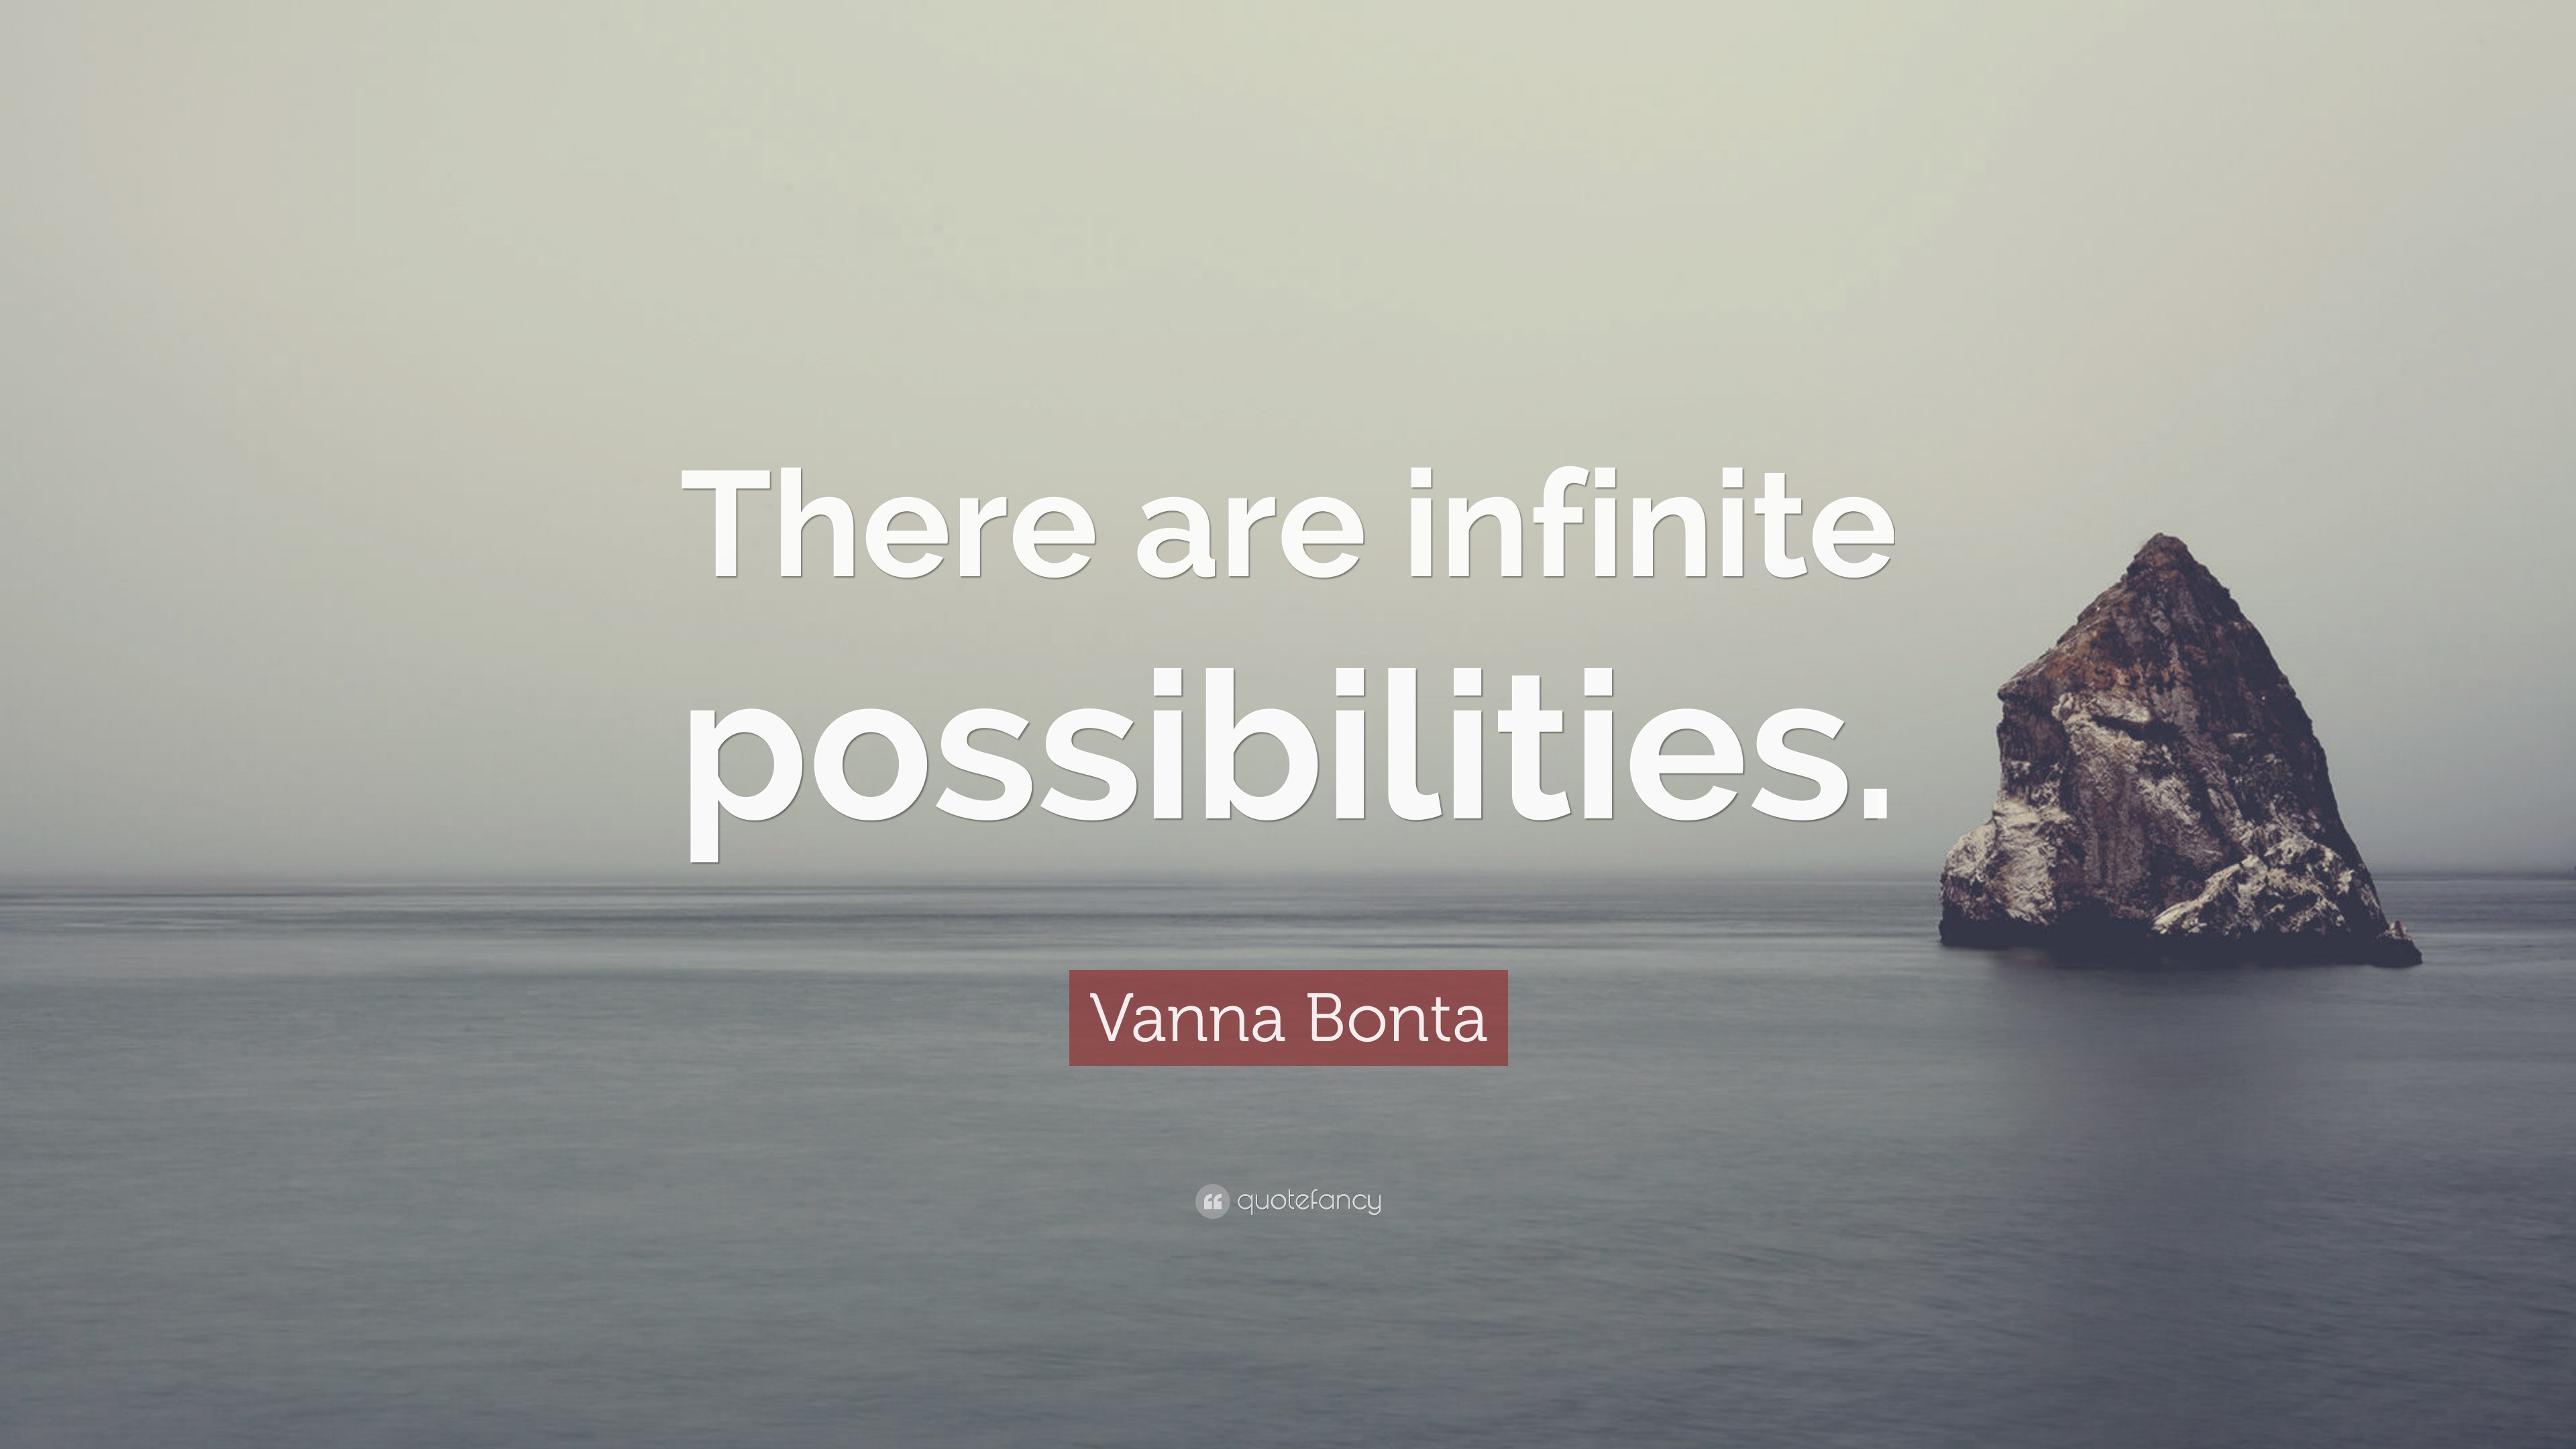 Vanna Bonta Quote: “There are infinite possibilities.”